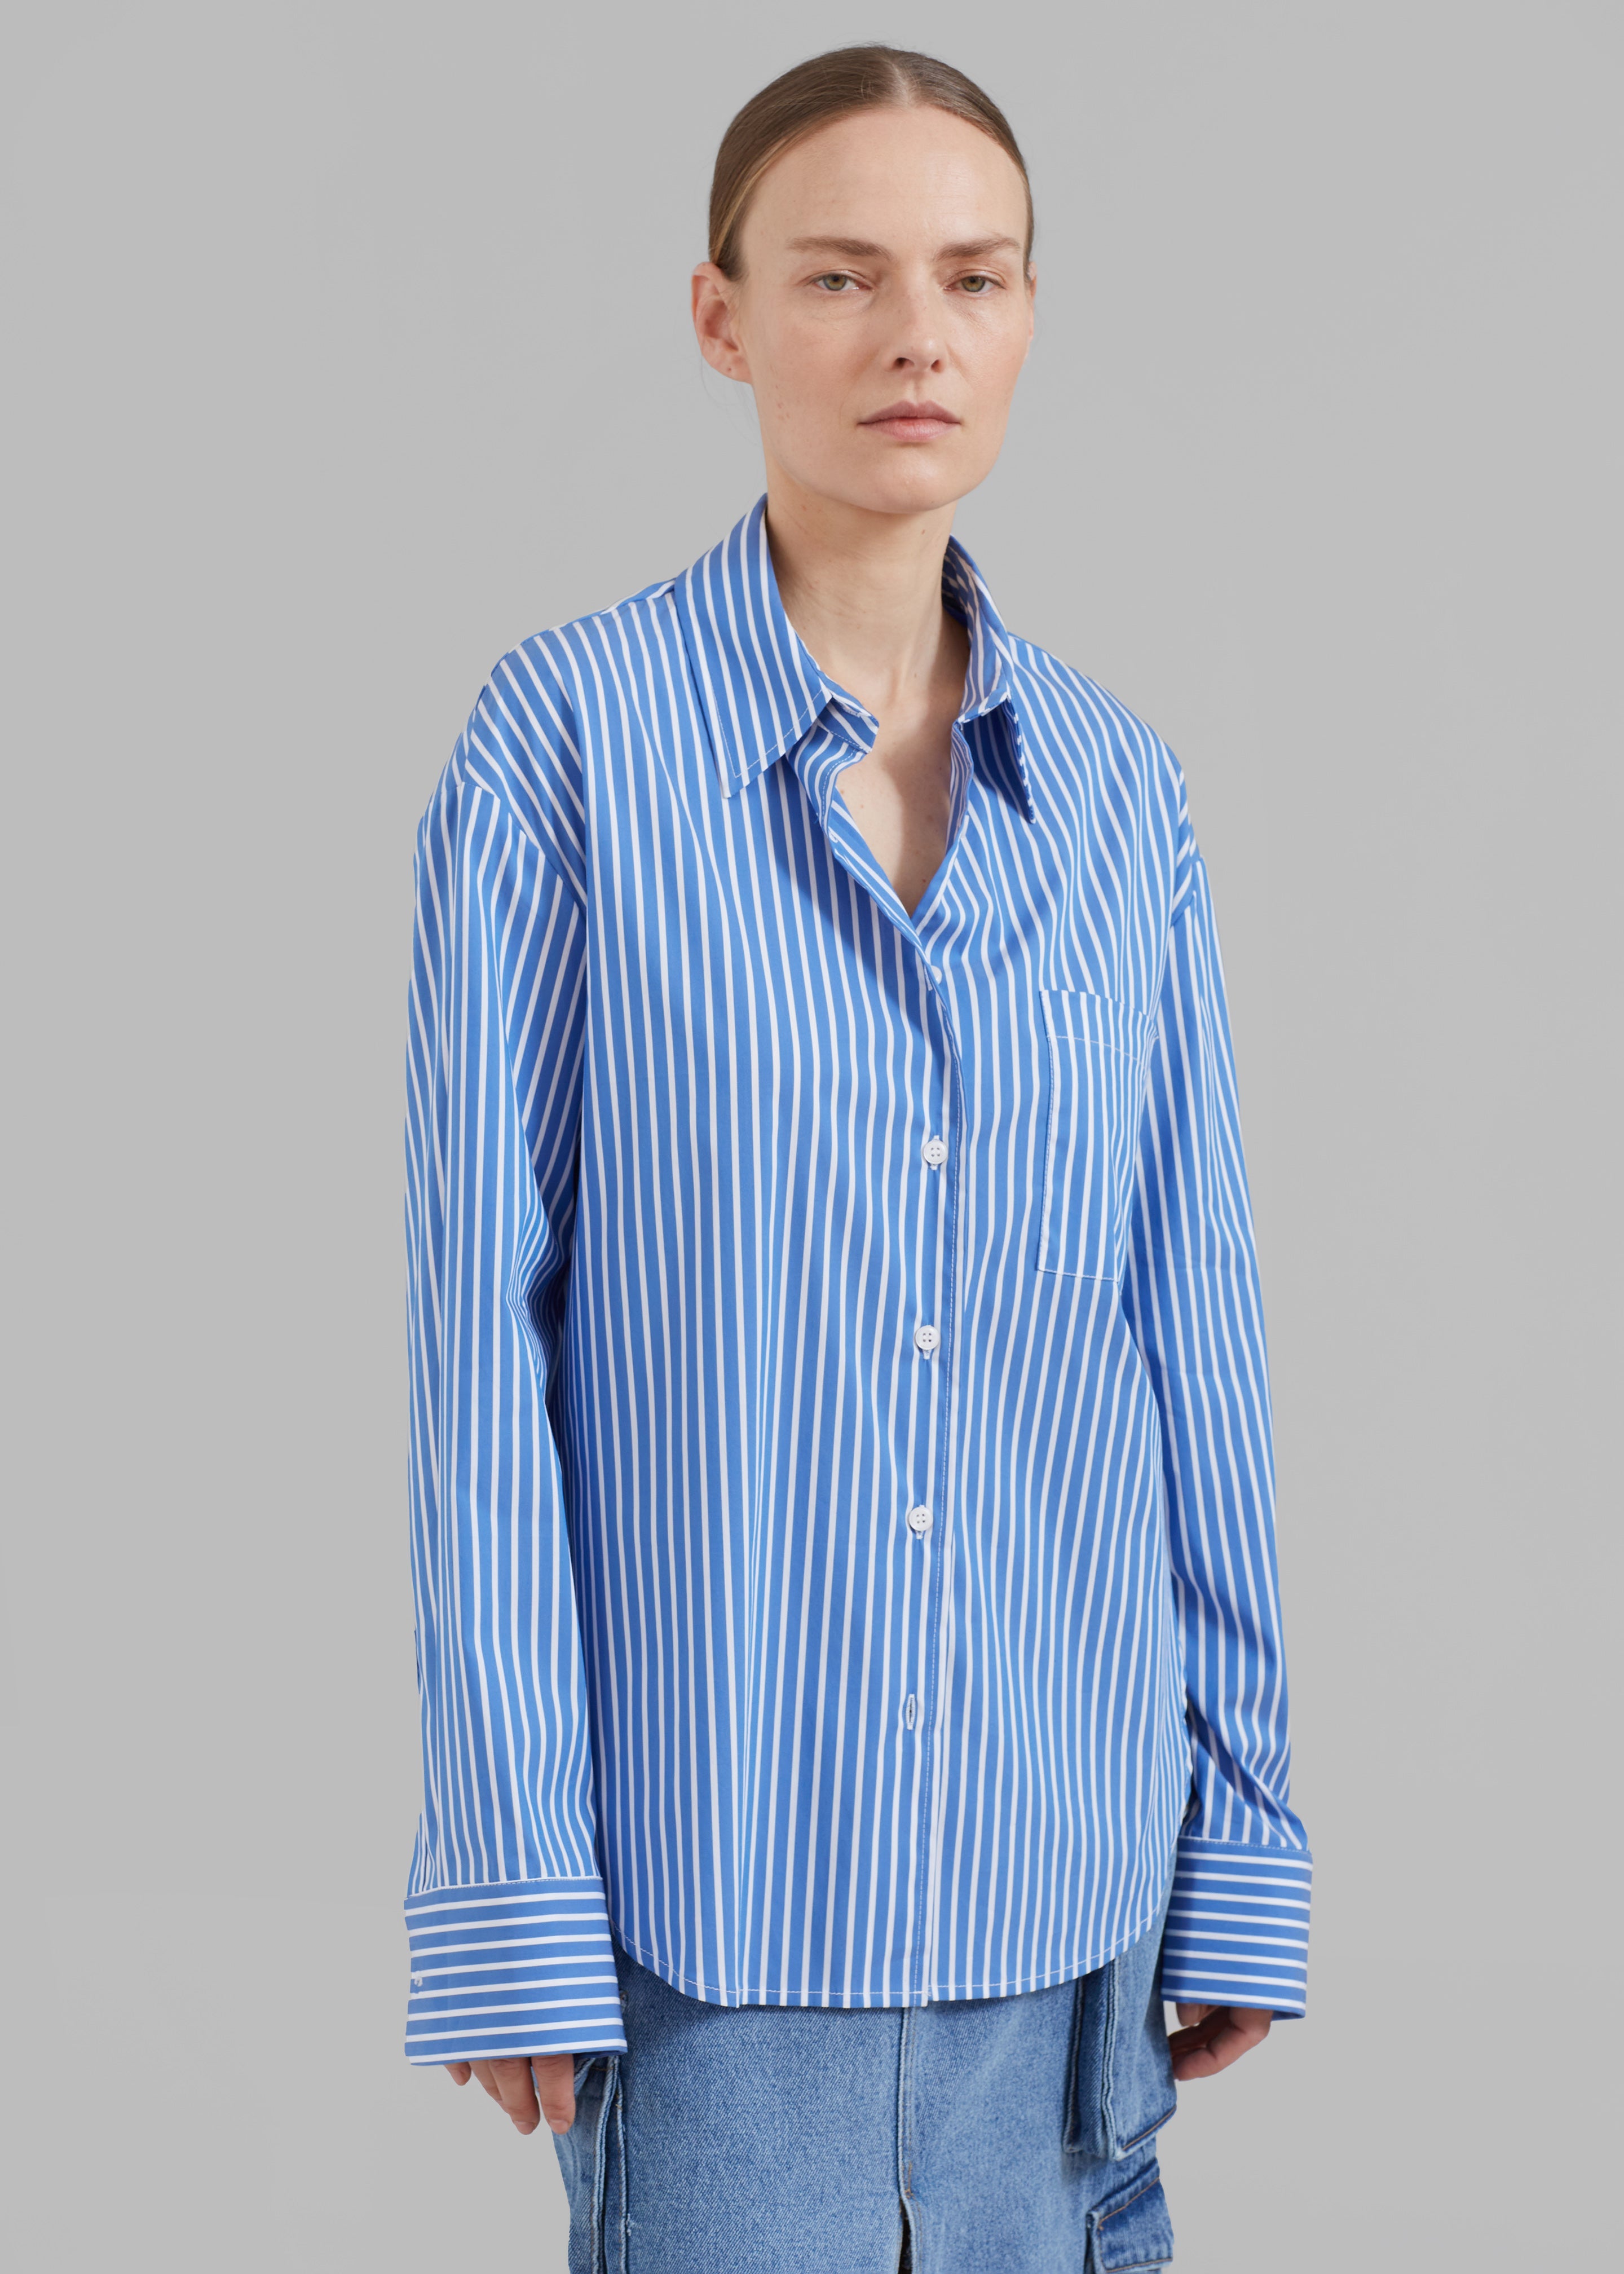 Lui Thin Stripe Shirt - Medium Blue Stripe - 7